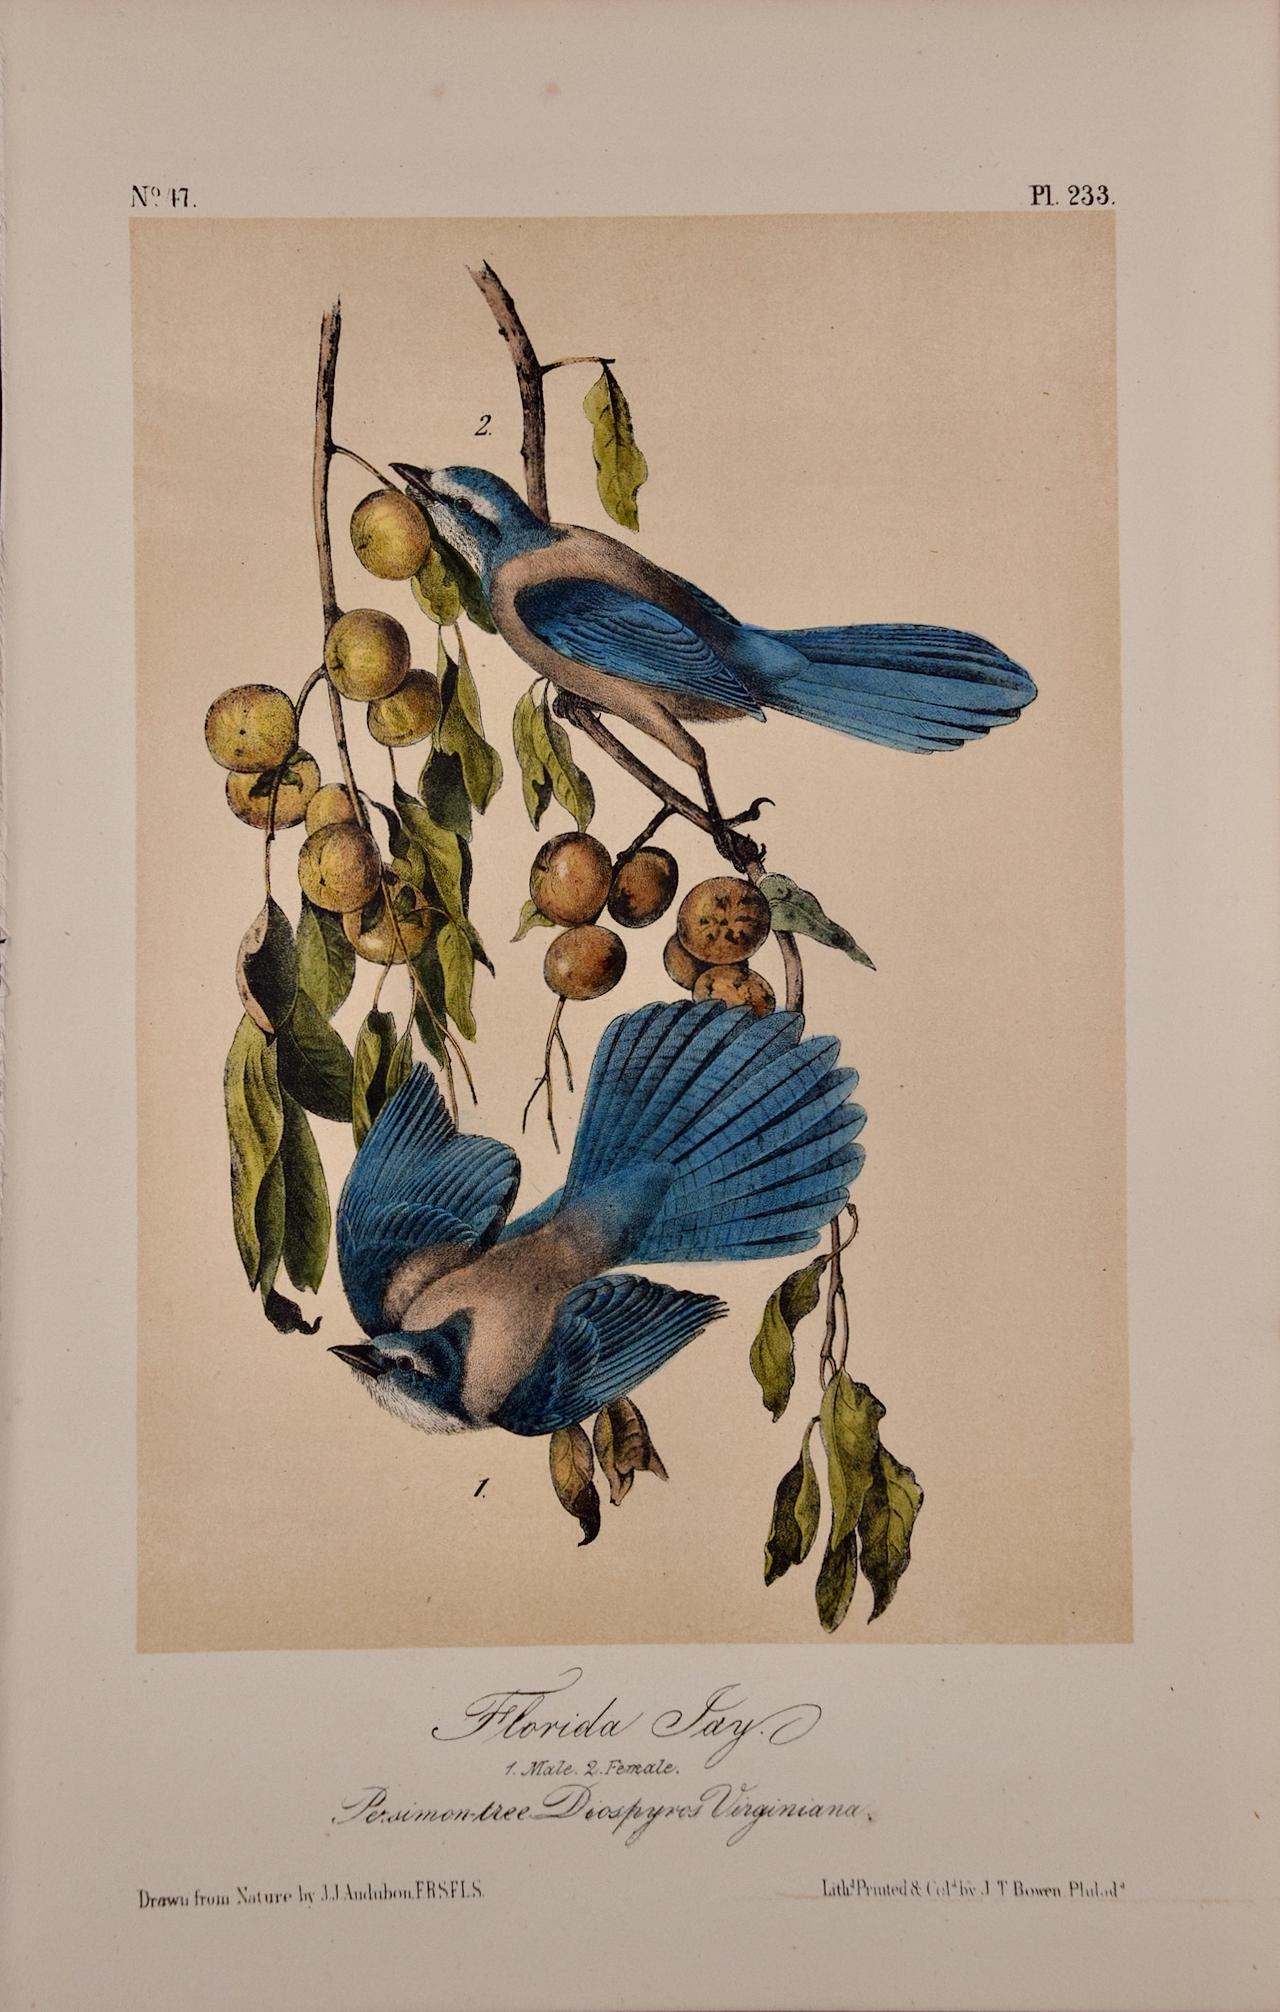 John James Audubon Landscape Print - Florida Jay Birds: An Original 19th C. Audubon Hand-colored Bird Lithograph